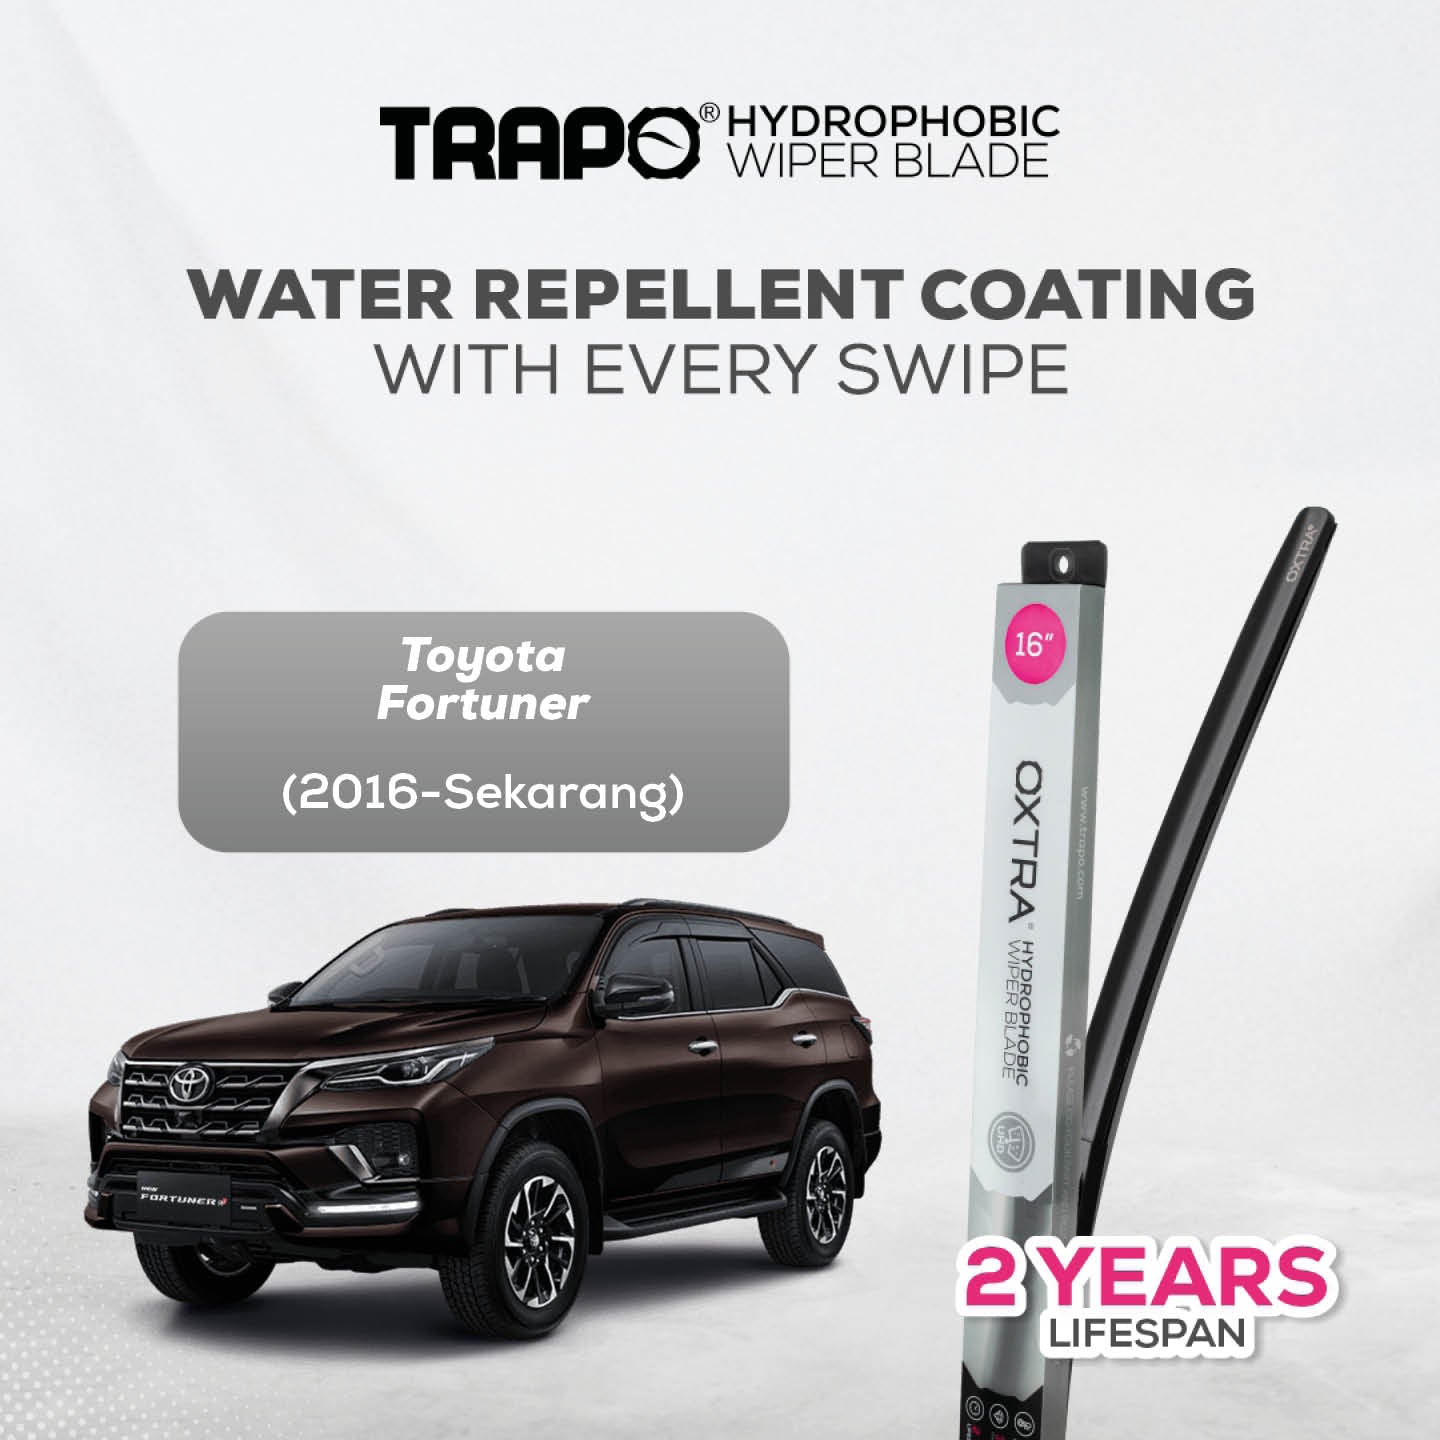 Trapo Hydrophobic Wiper Blade Toyota Fortuner (2016-Sekarang)